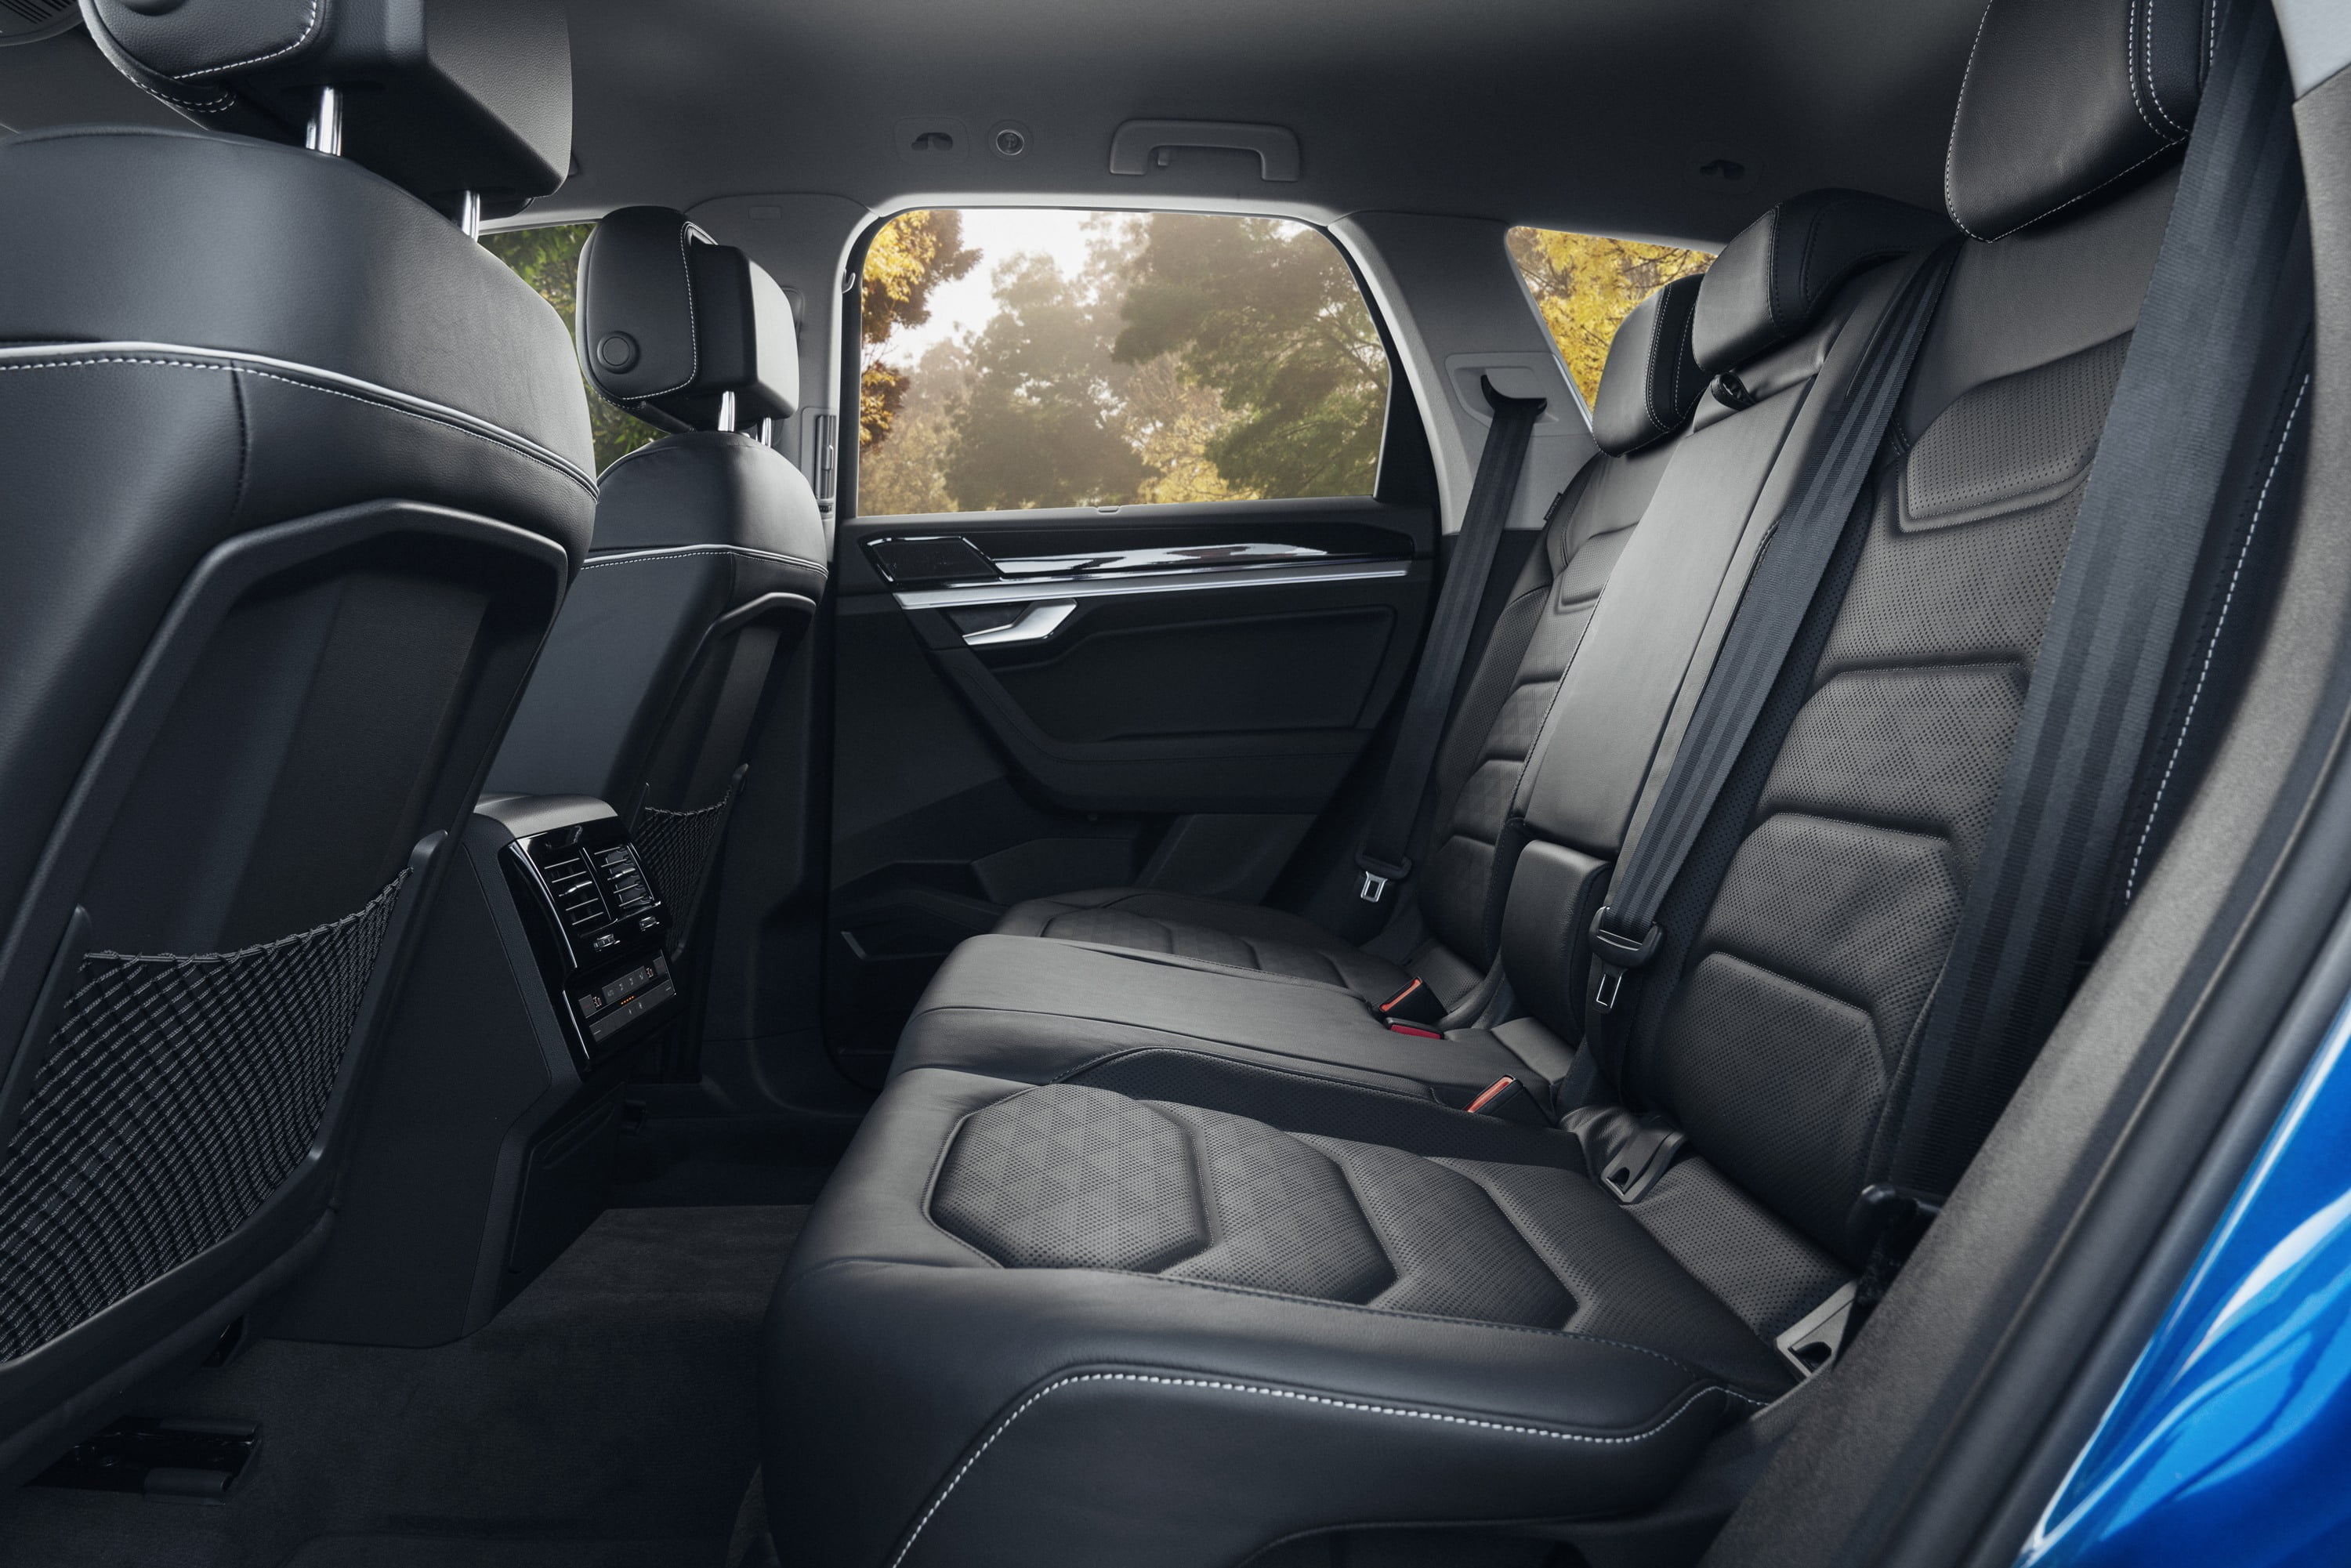 2019 VW Touareg Launch Edition 11 rear seats